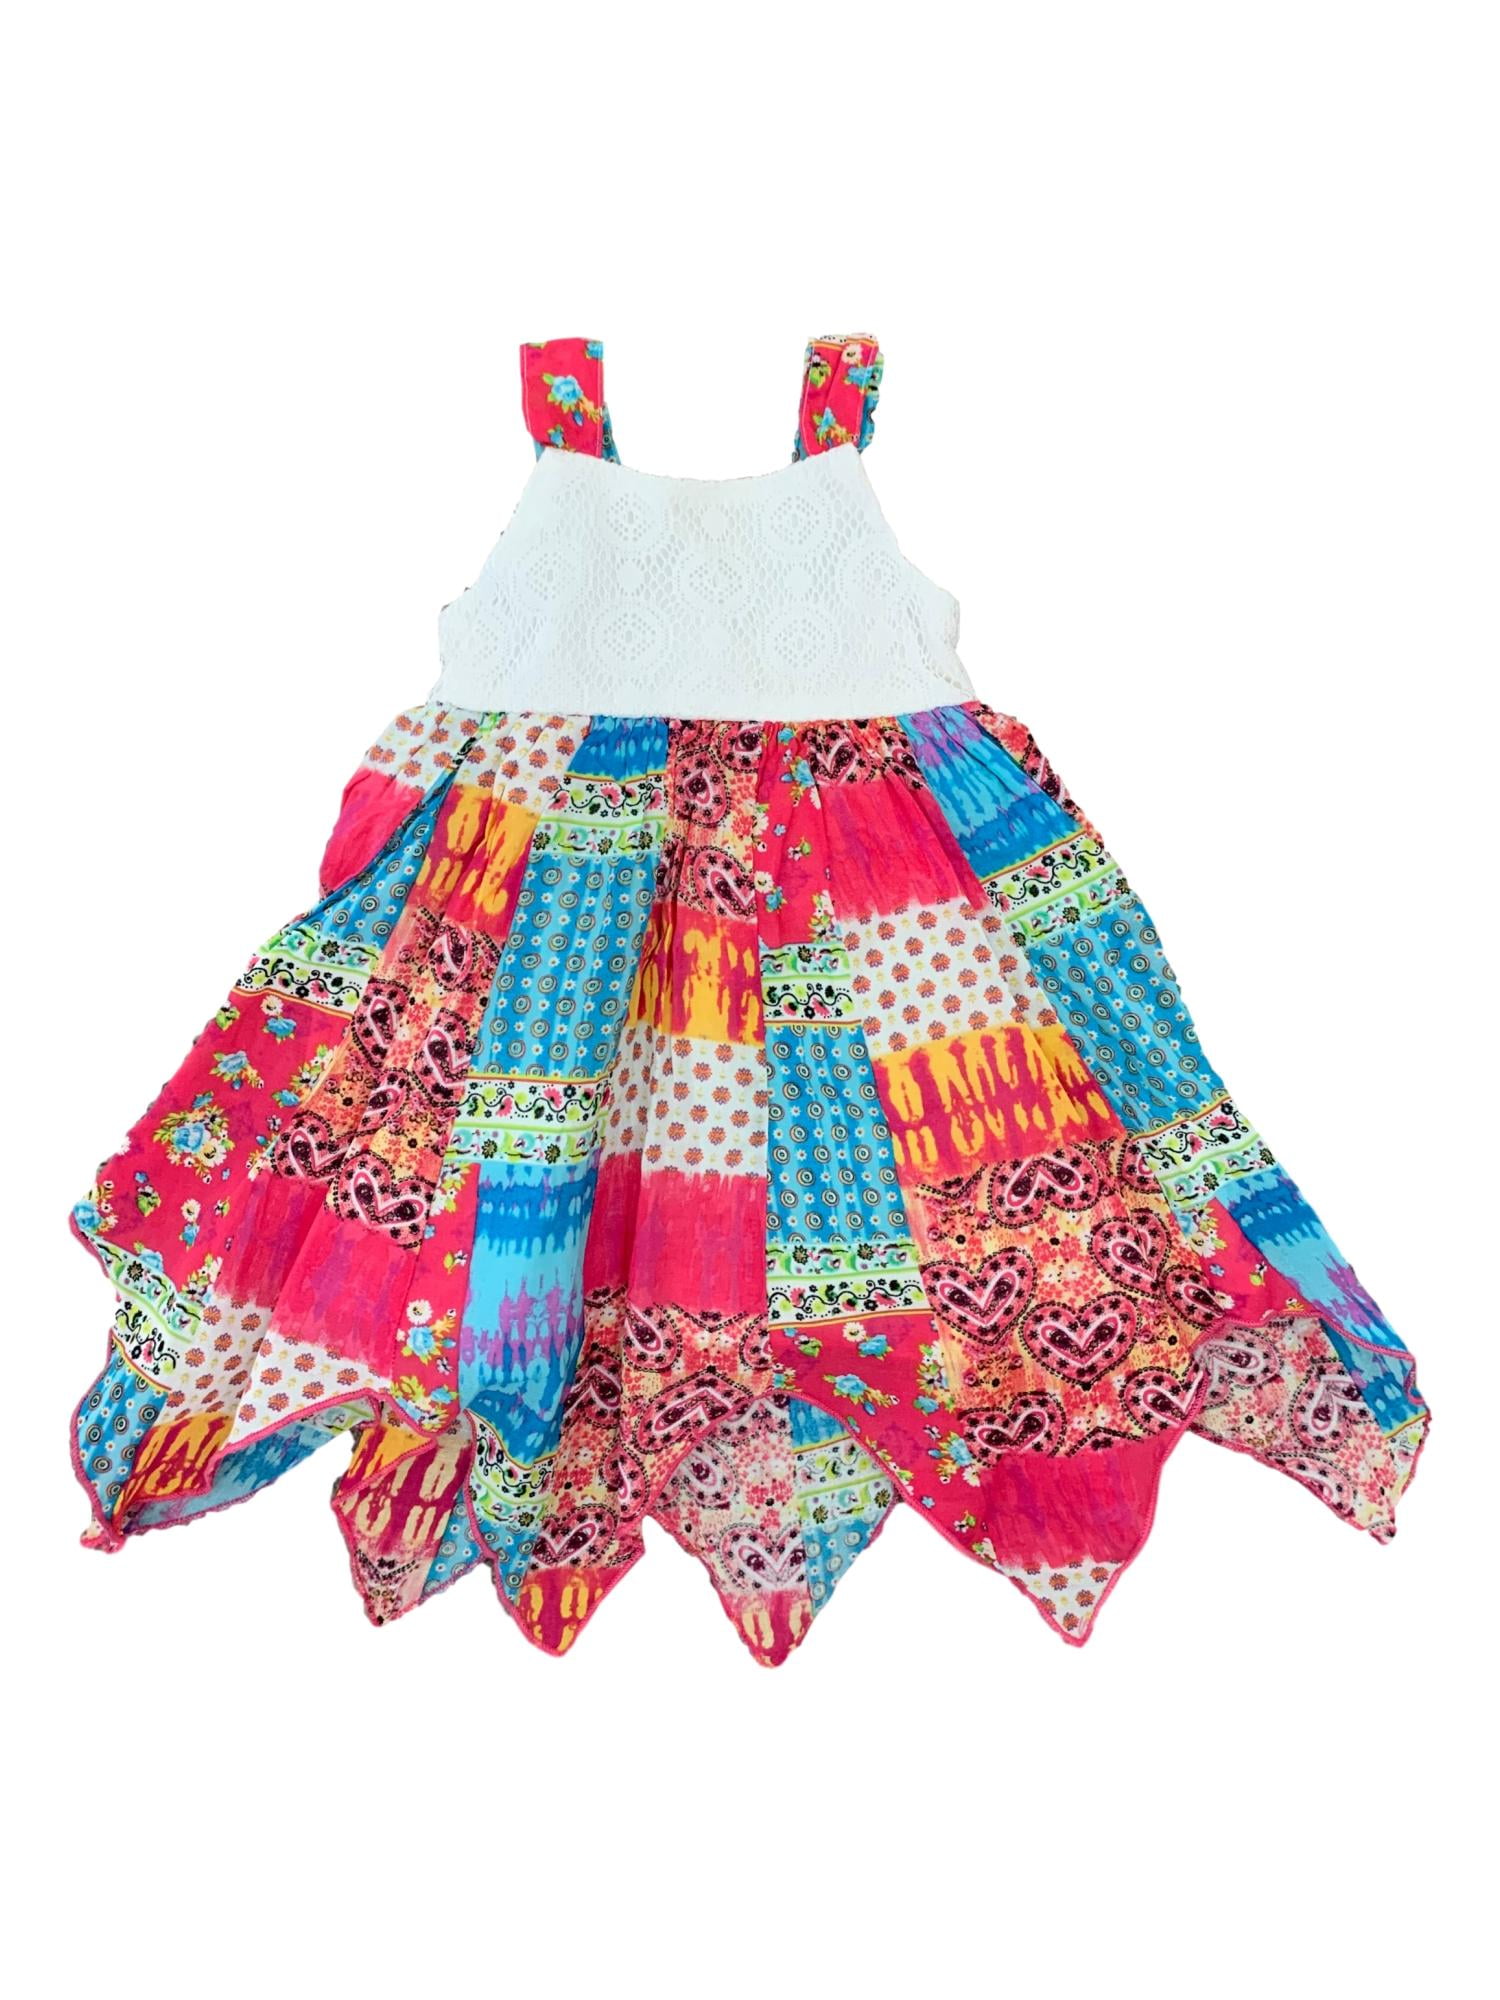 Details about   Bluberi Boulevard Dress For Infant/Toddler Girls 